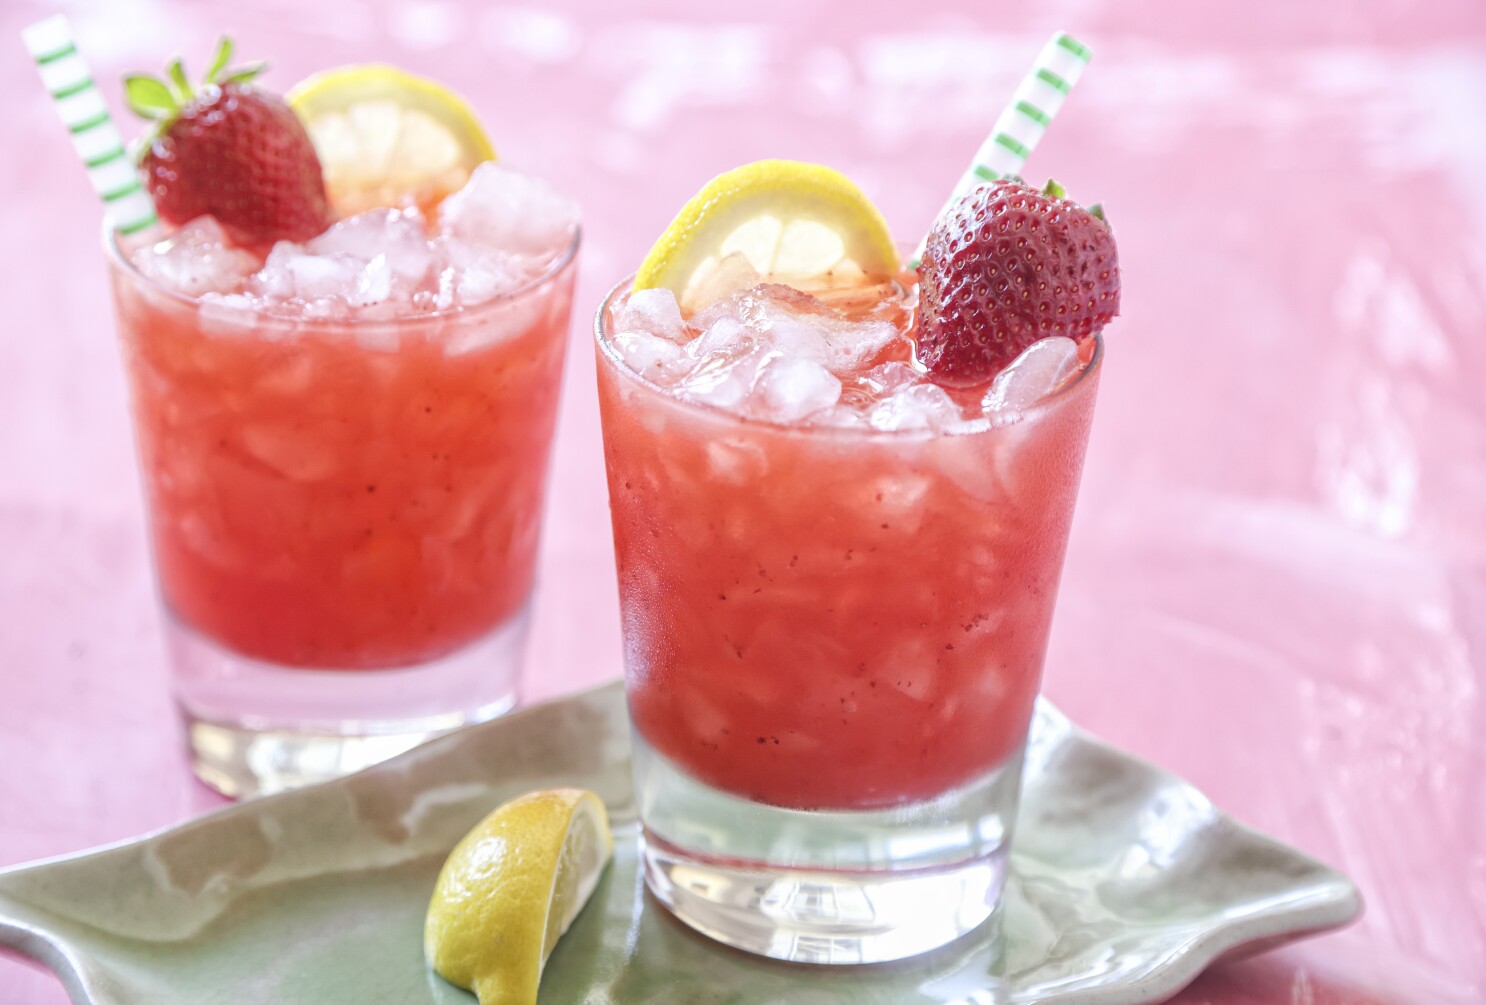 Strawberry Lemonade Days Work Their Seasonal Magic The San Diego Union Tribune